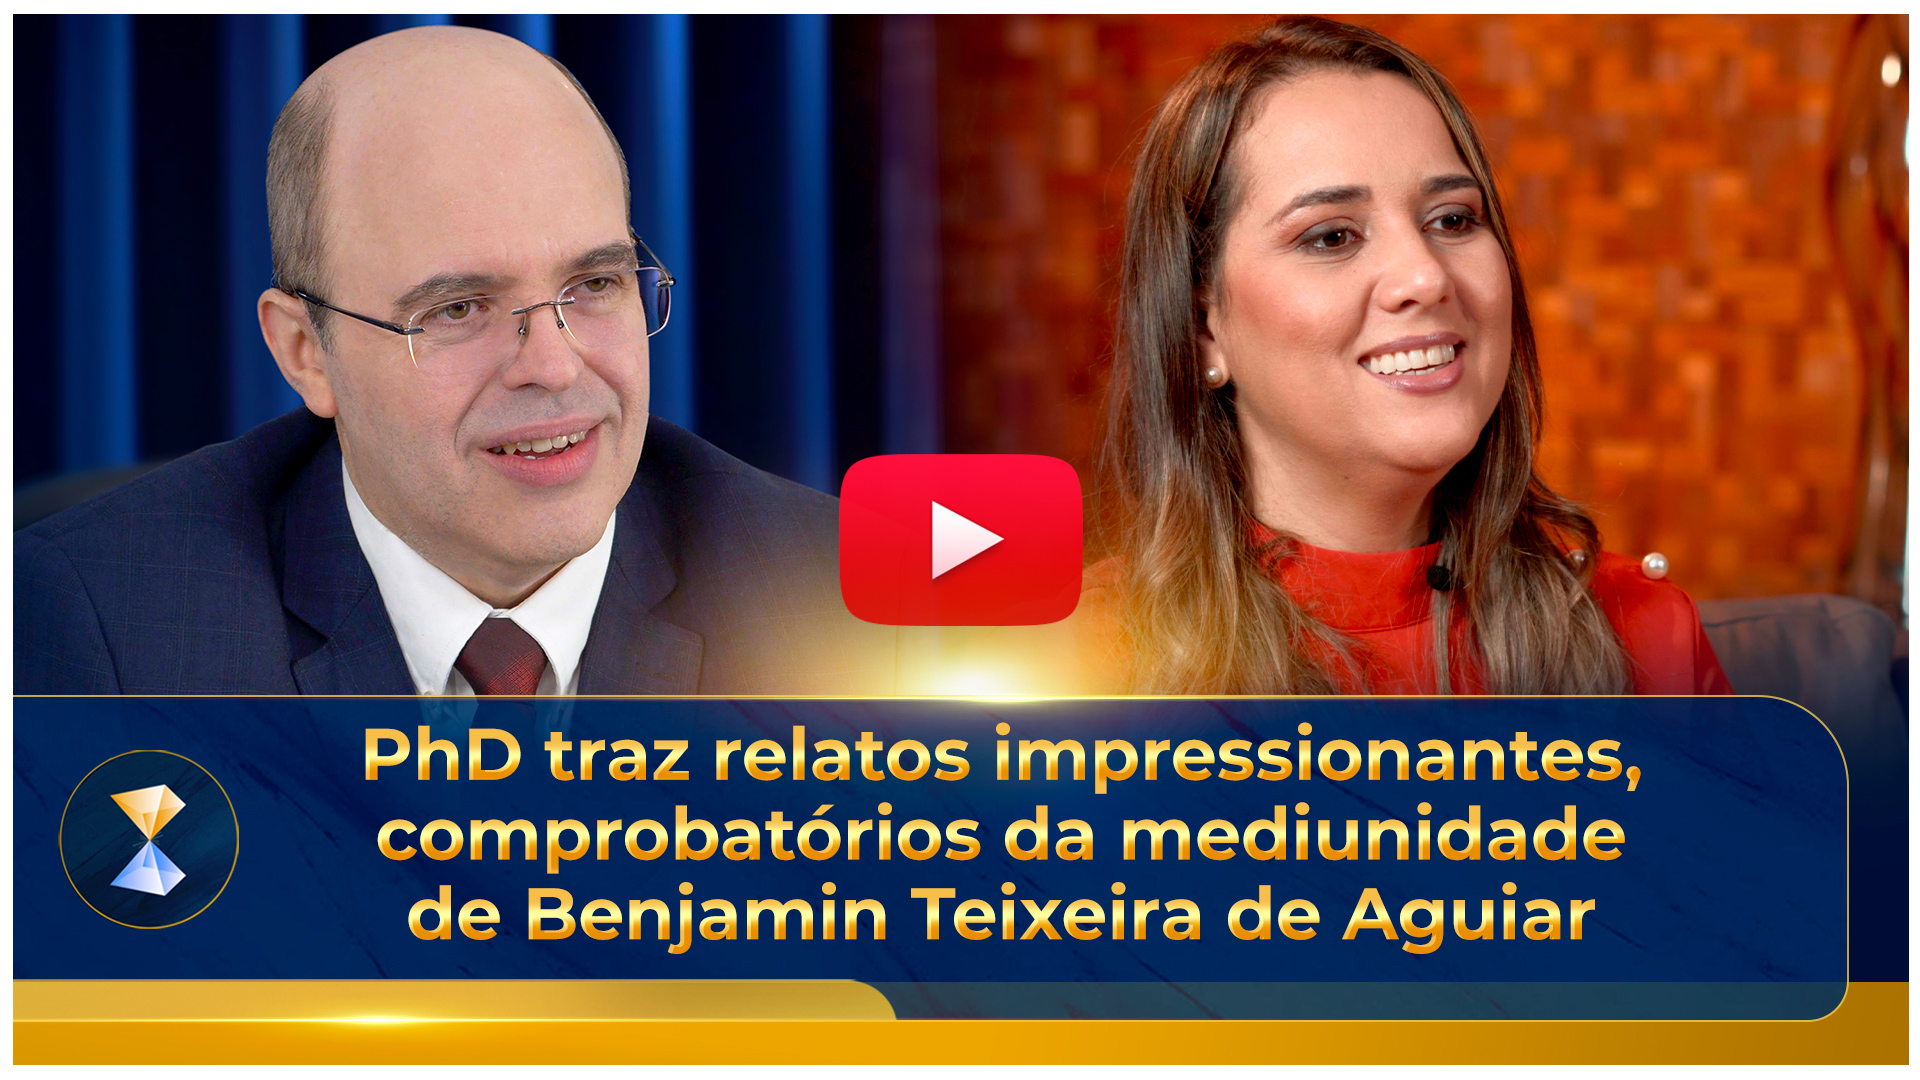 PhD traz relatos impressionantes, comprobatórios da mediunidade de Benjamin Teixeira de Aguiar 